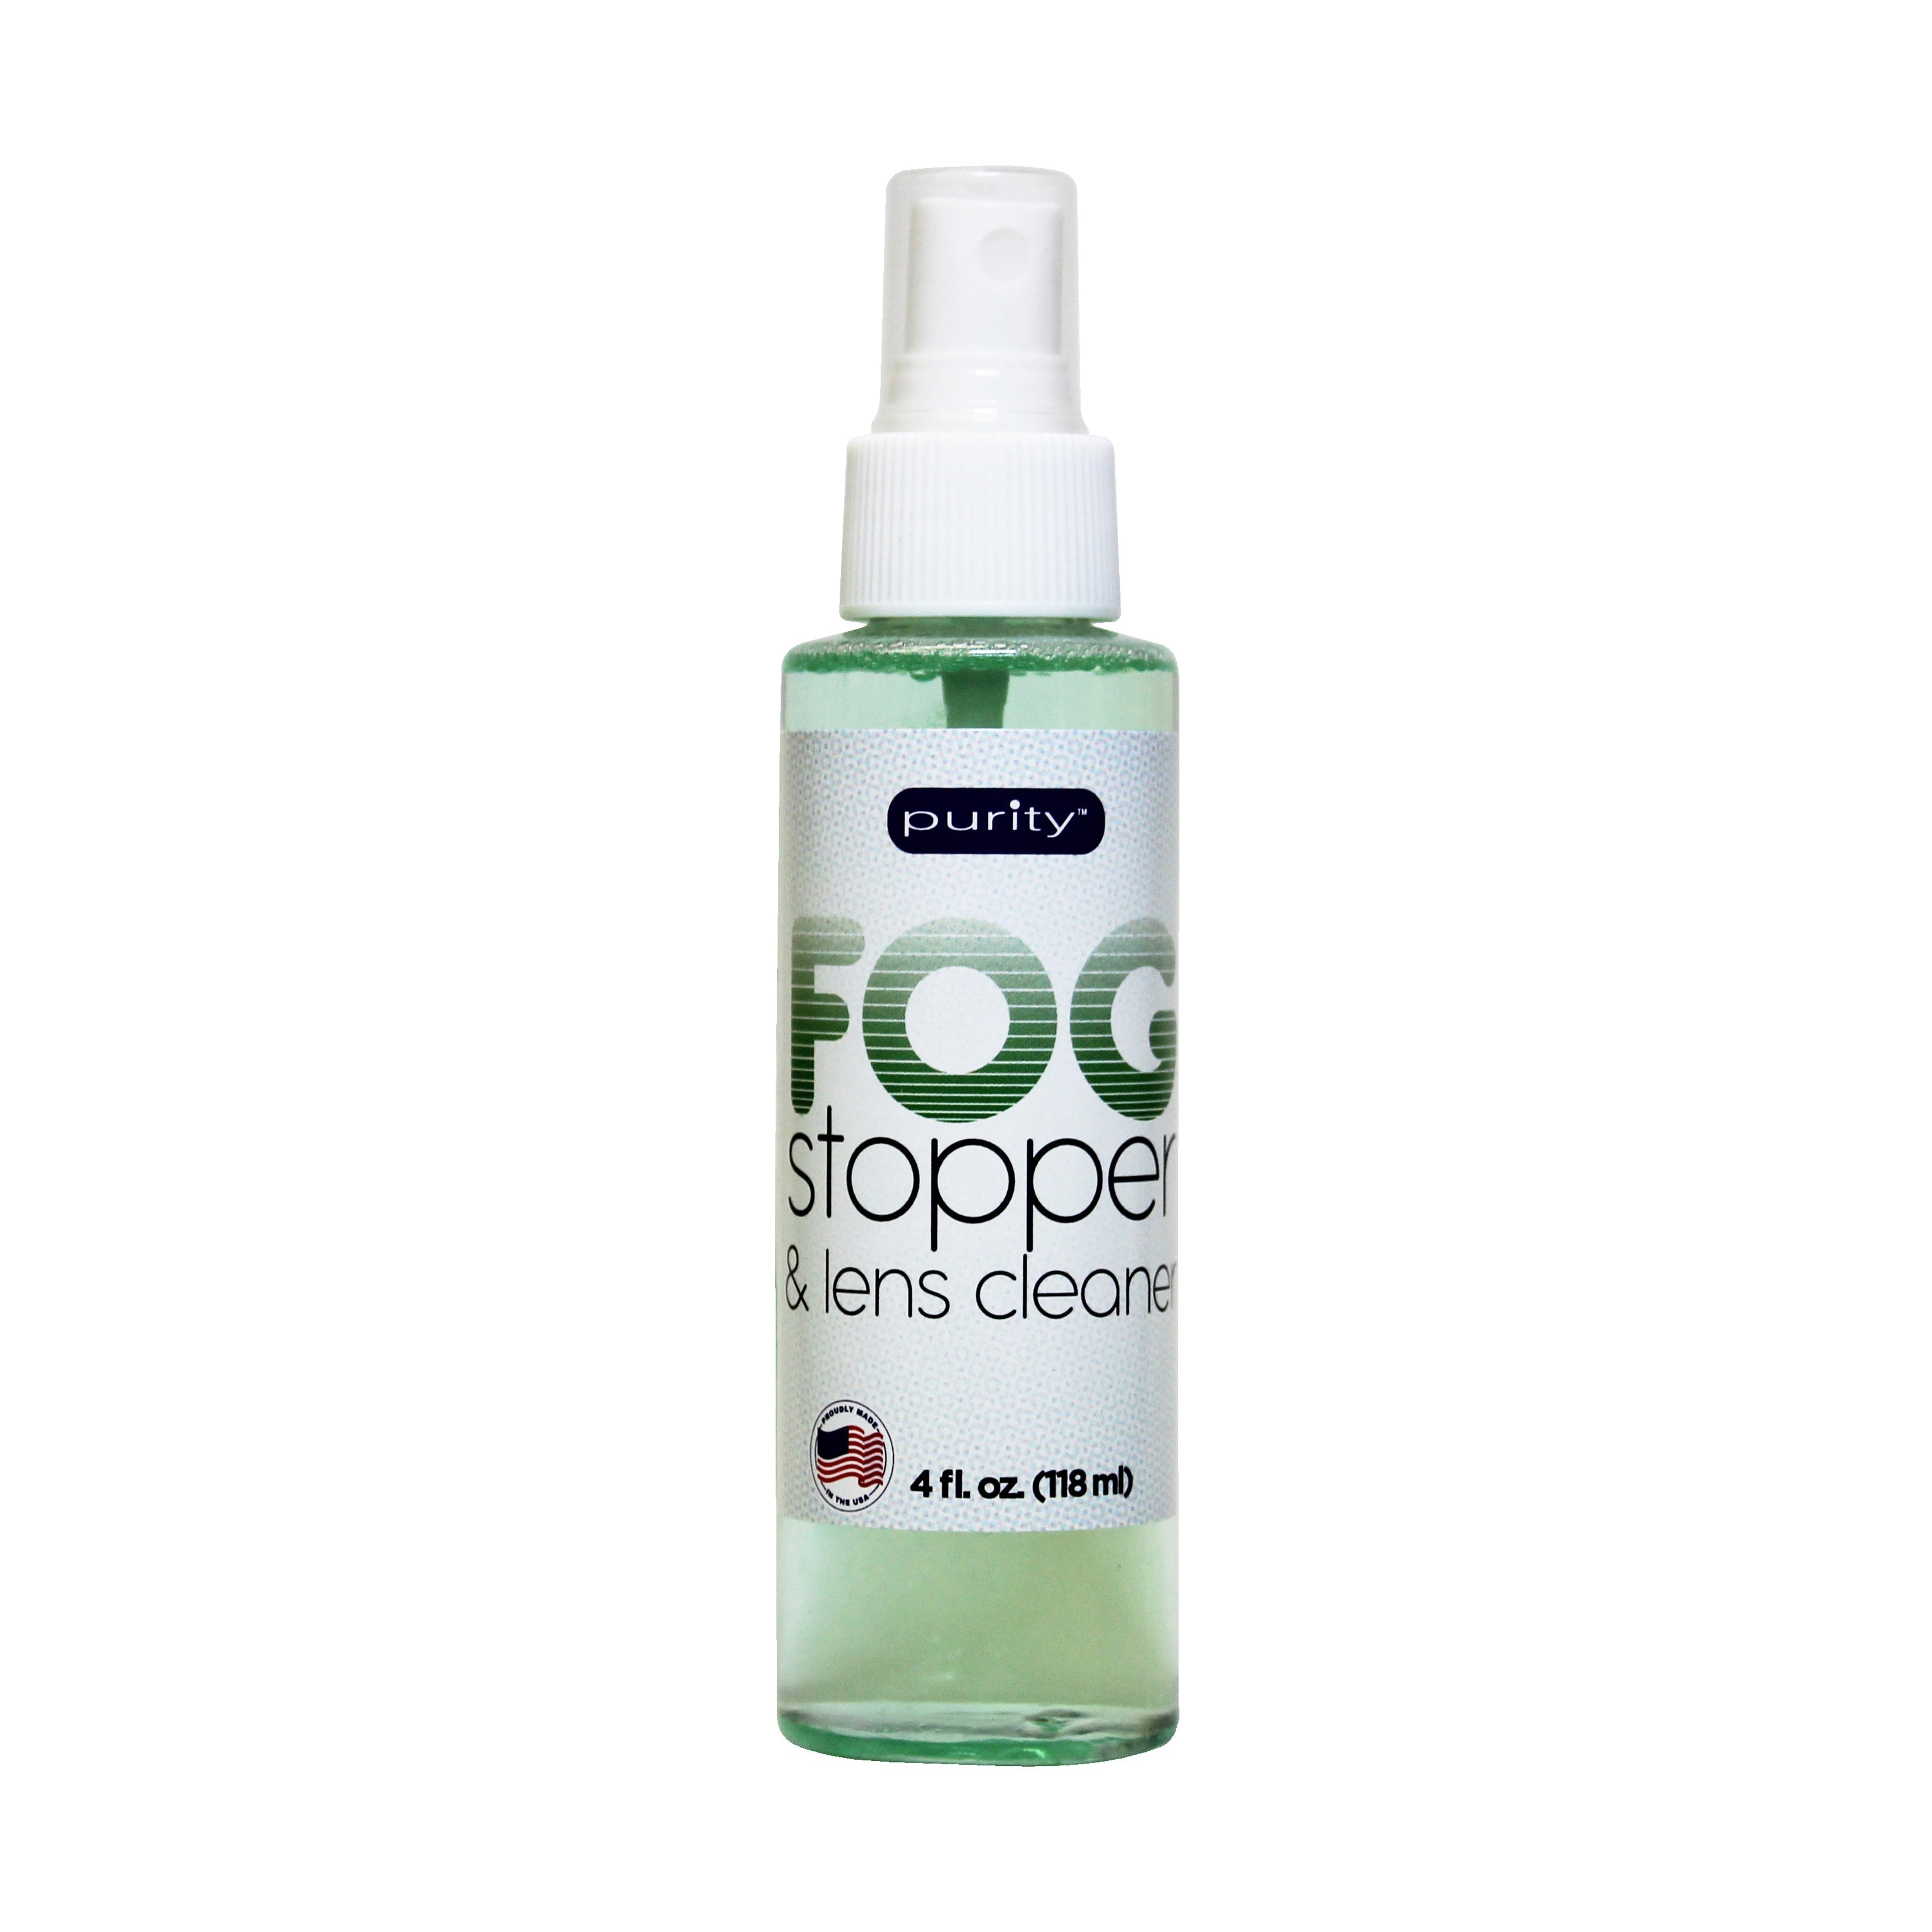 4 oz. Purity Imprinted Fog Stopper & Lens Cleaner